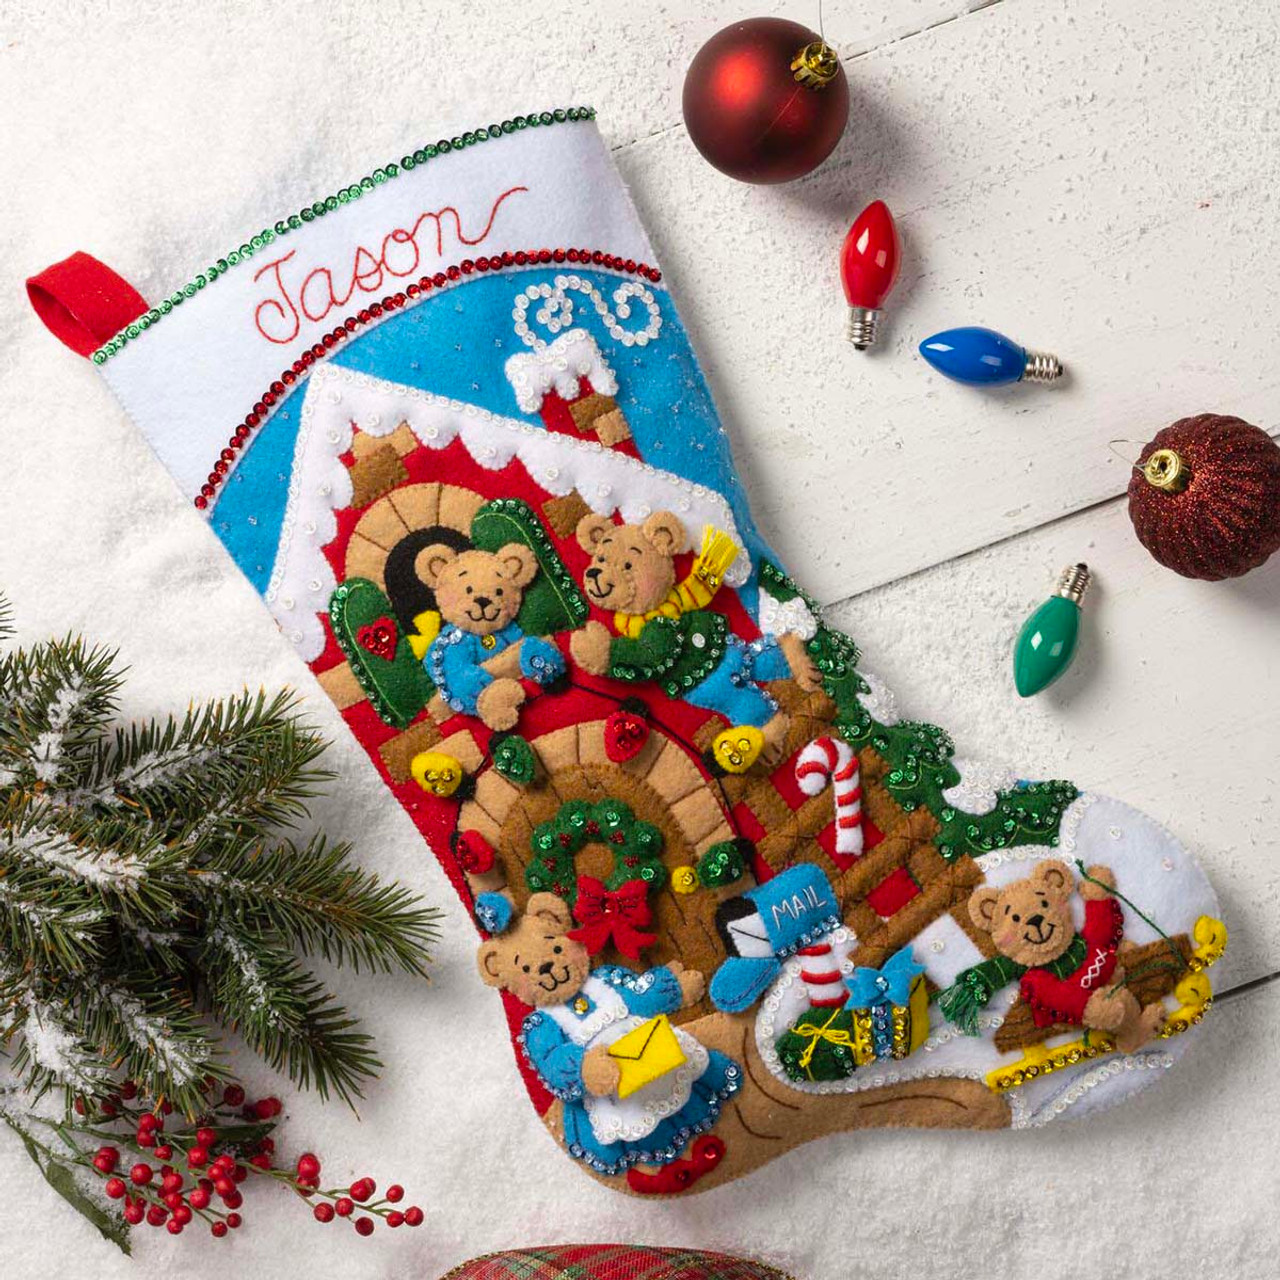 A Bear-y Merry Christmas Bucilla Felt Stocking Kit